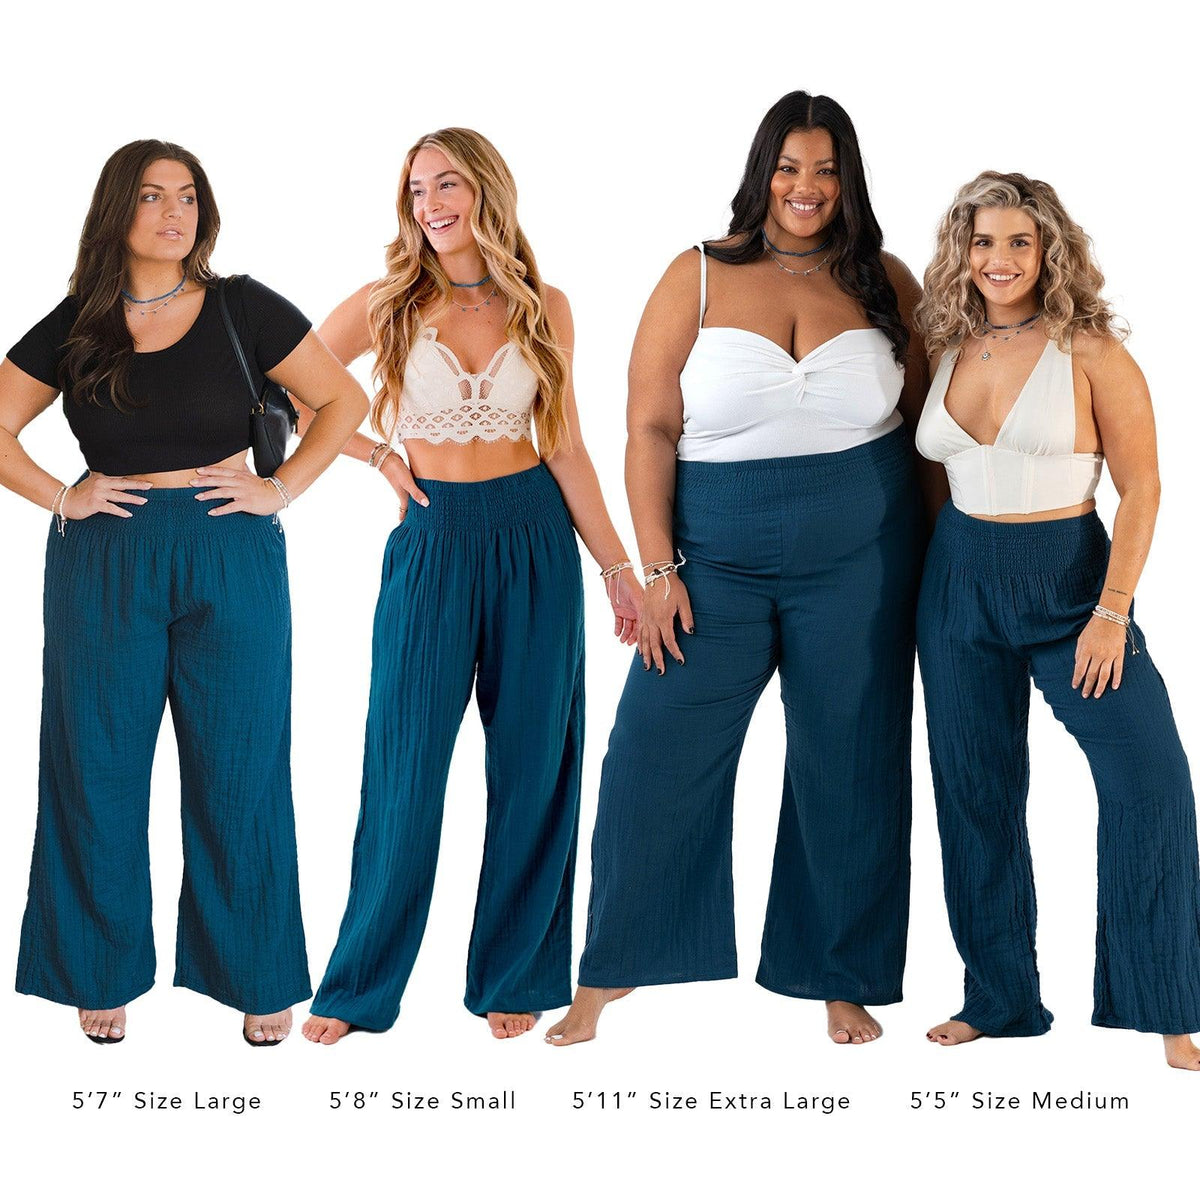 Models of different sizes wearing dark blue wide leg cotton gauze pants